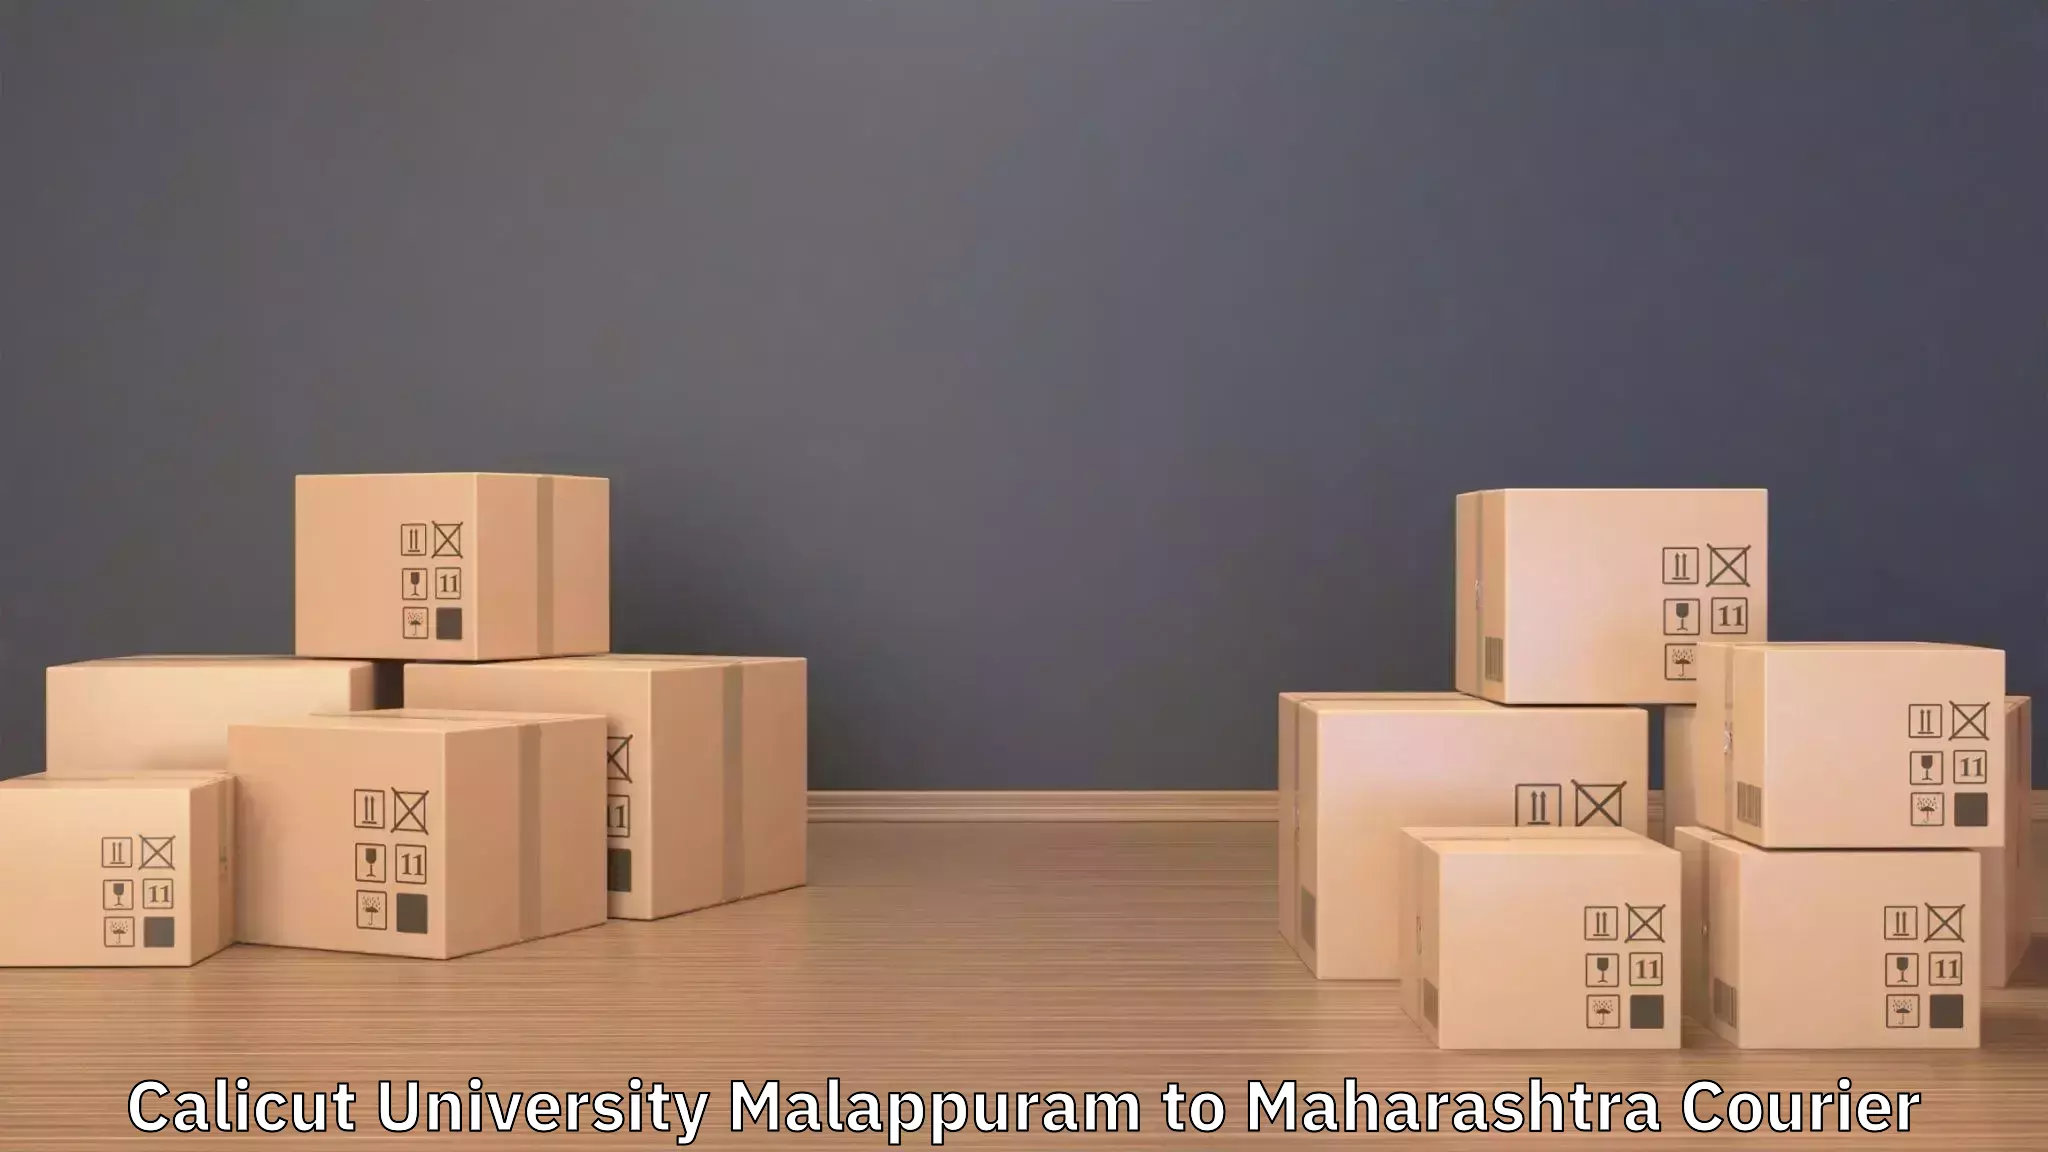 Furniture transport company Calicut University Malappuram to Tata Institute of Social Sciences Mumbai